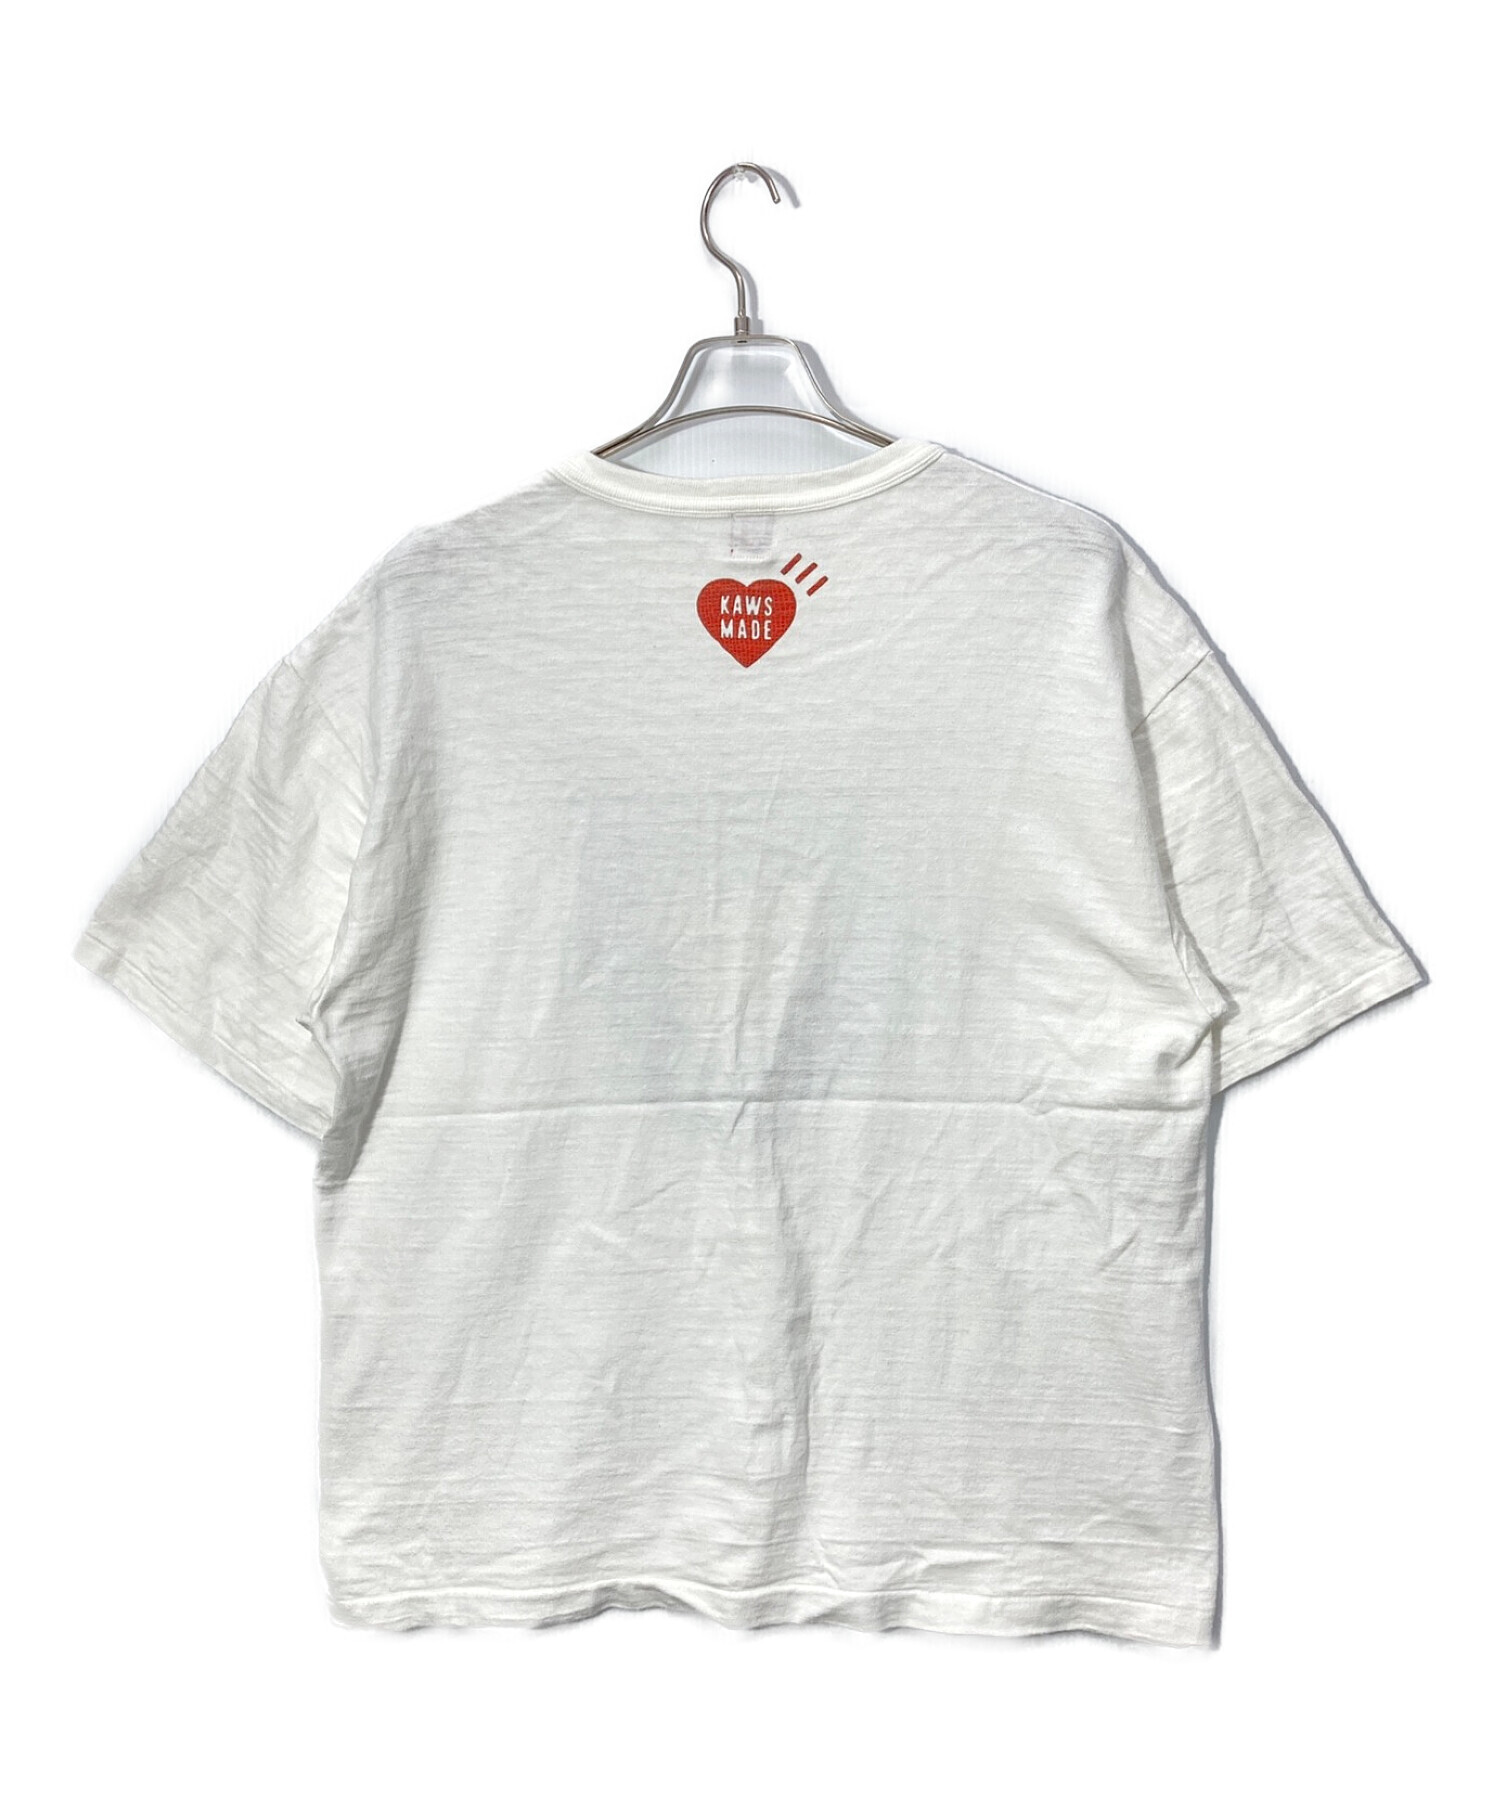 XL HUMAN MADE KAWS T-Shirt #5 "White"メンズ